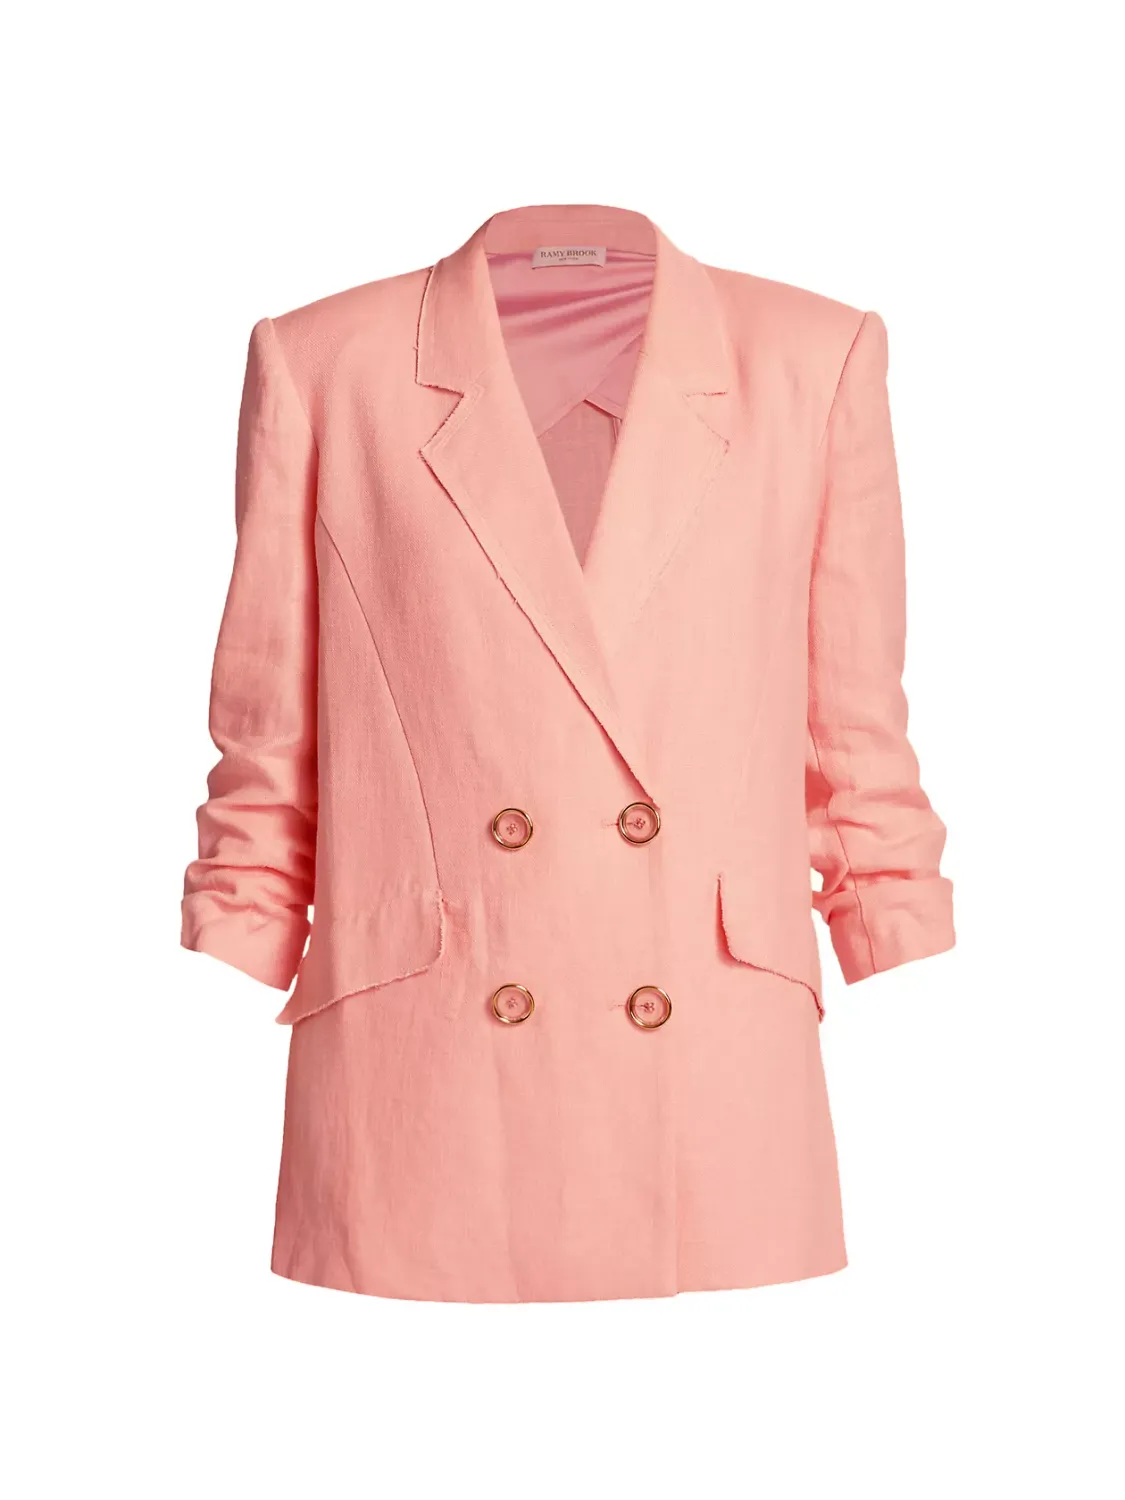 Gianni Jacket, Color: Pink, Size: 6